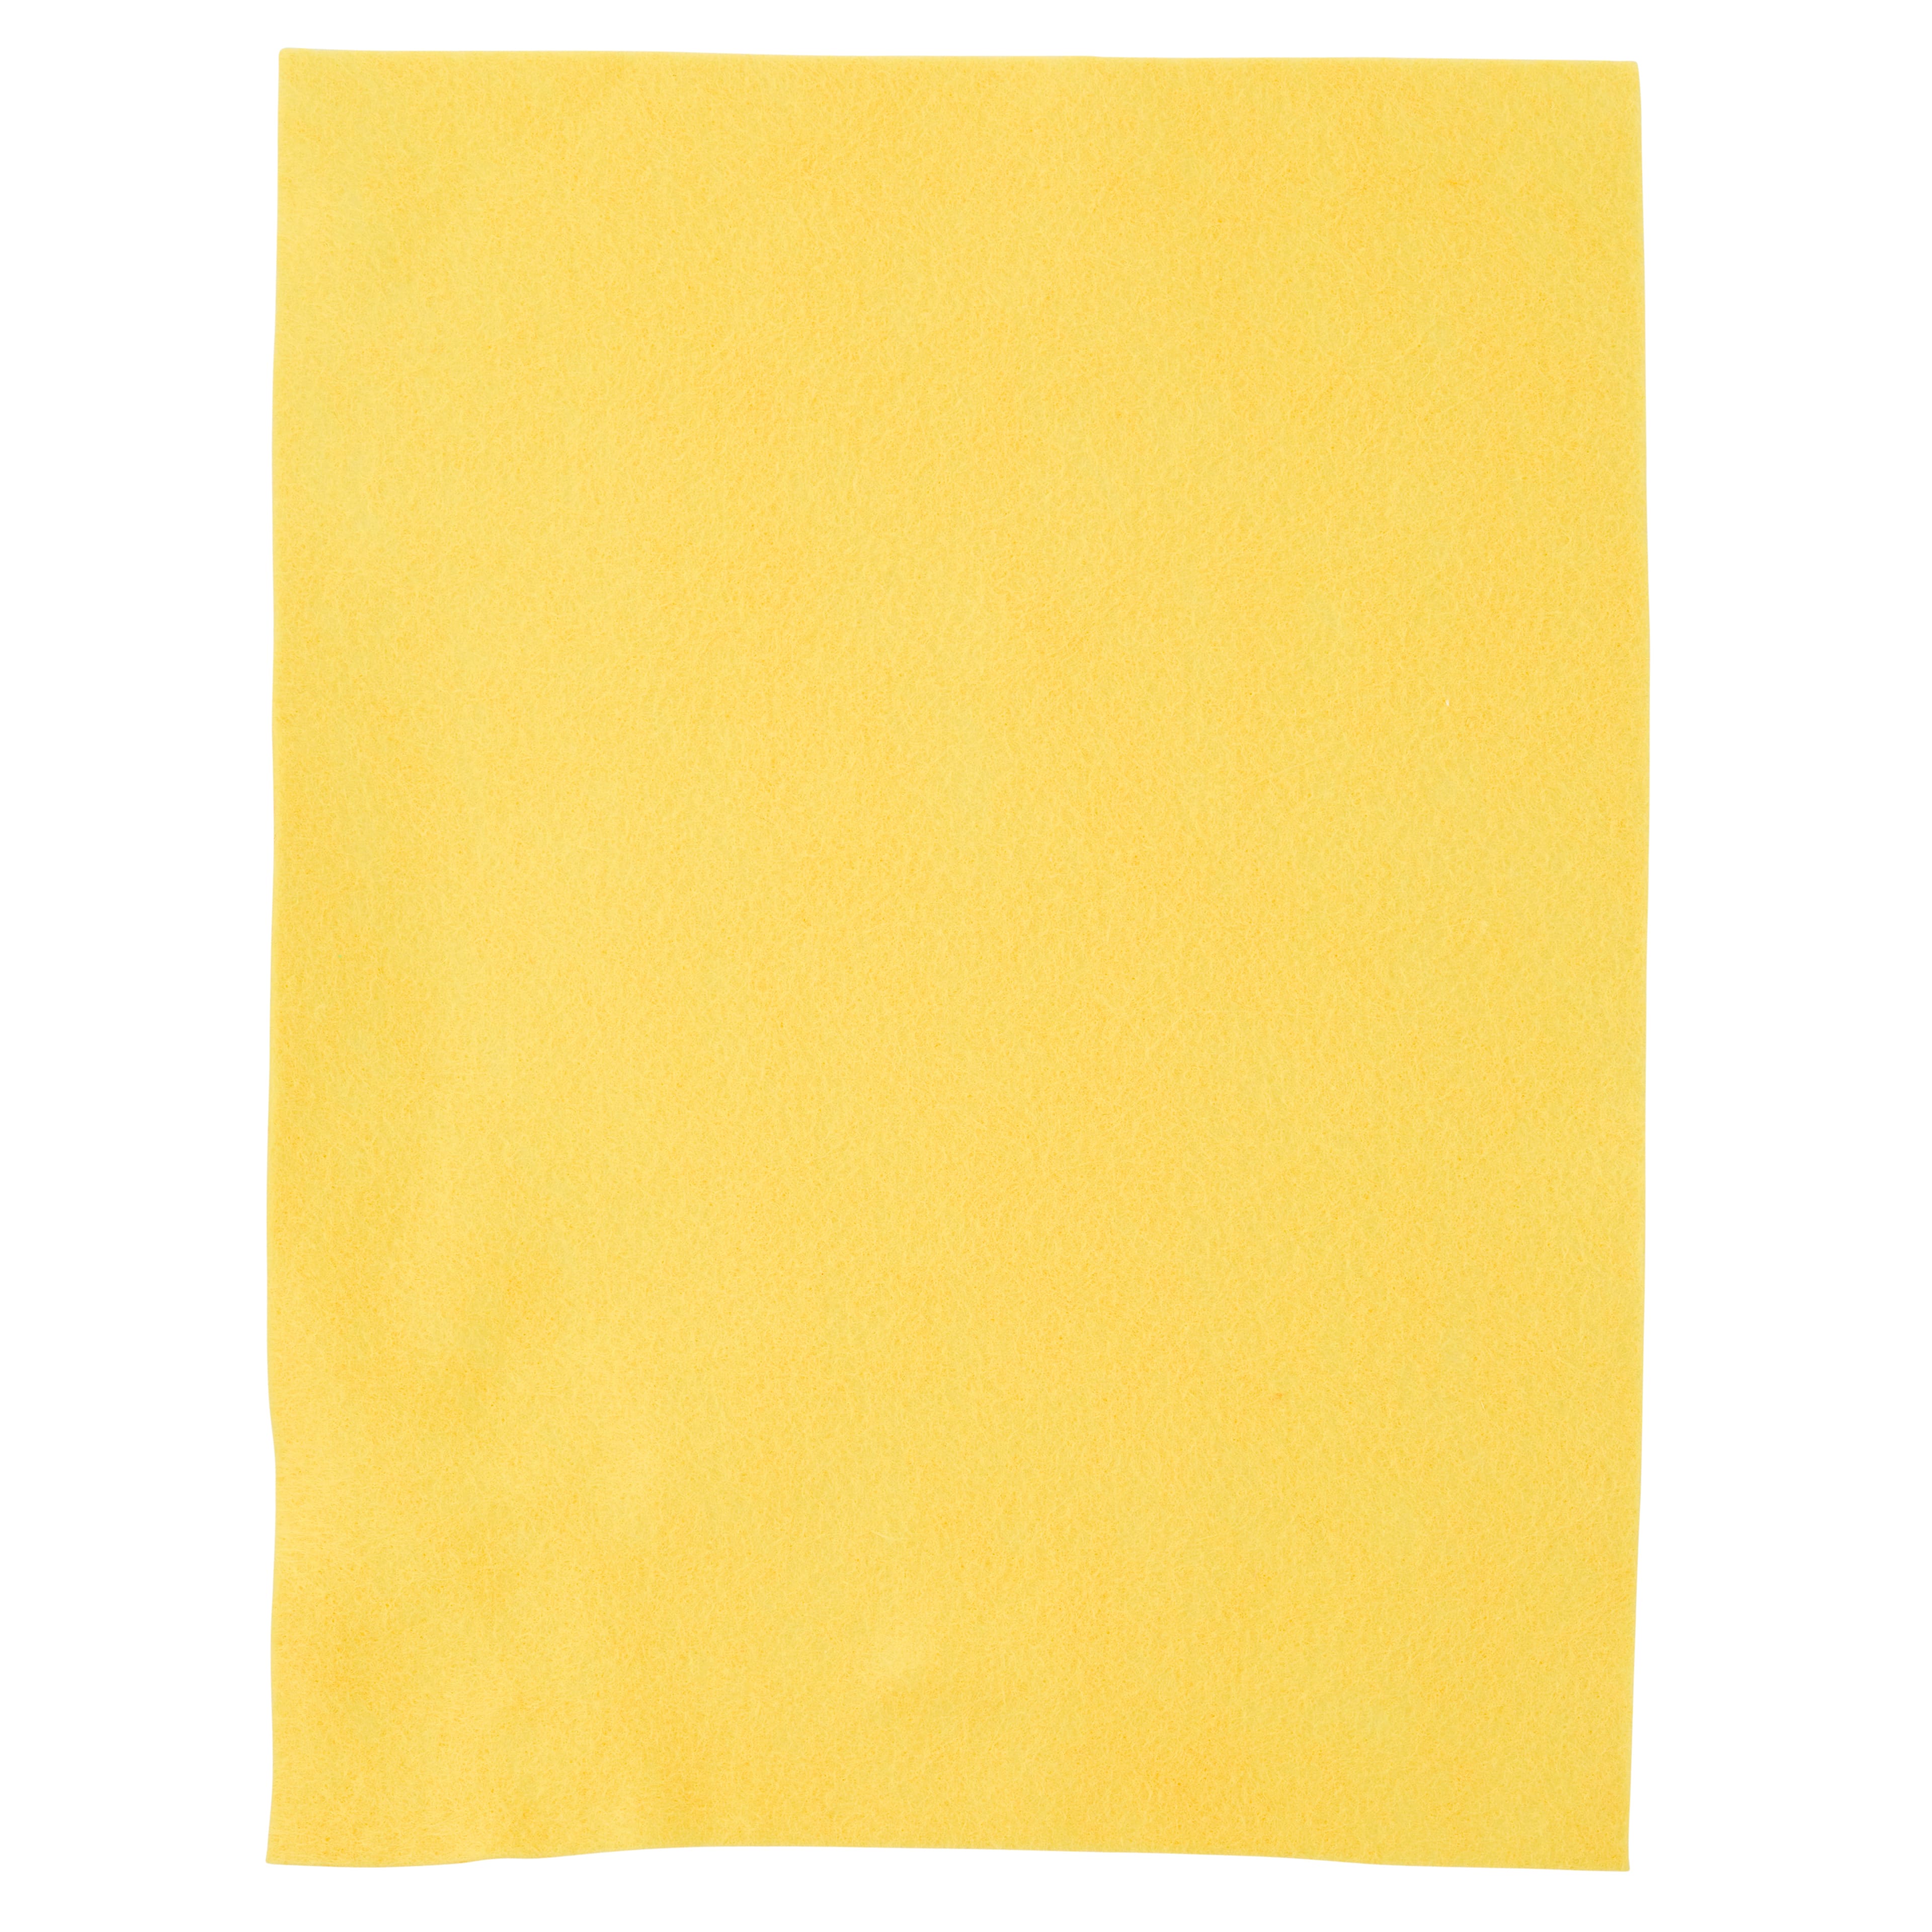 Dimensions Feltworks Needle Felting Mat in Yellow | 3.5 x 4.5 (8cm x 11cm) | Michaels